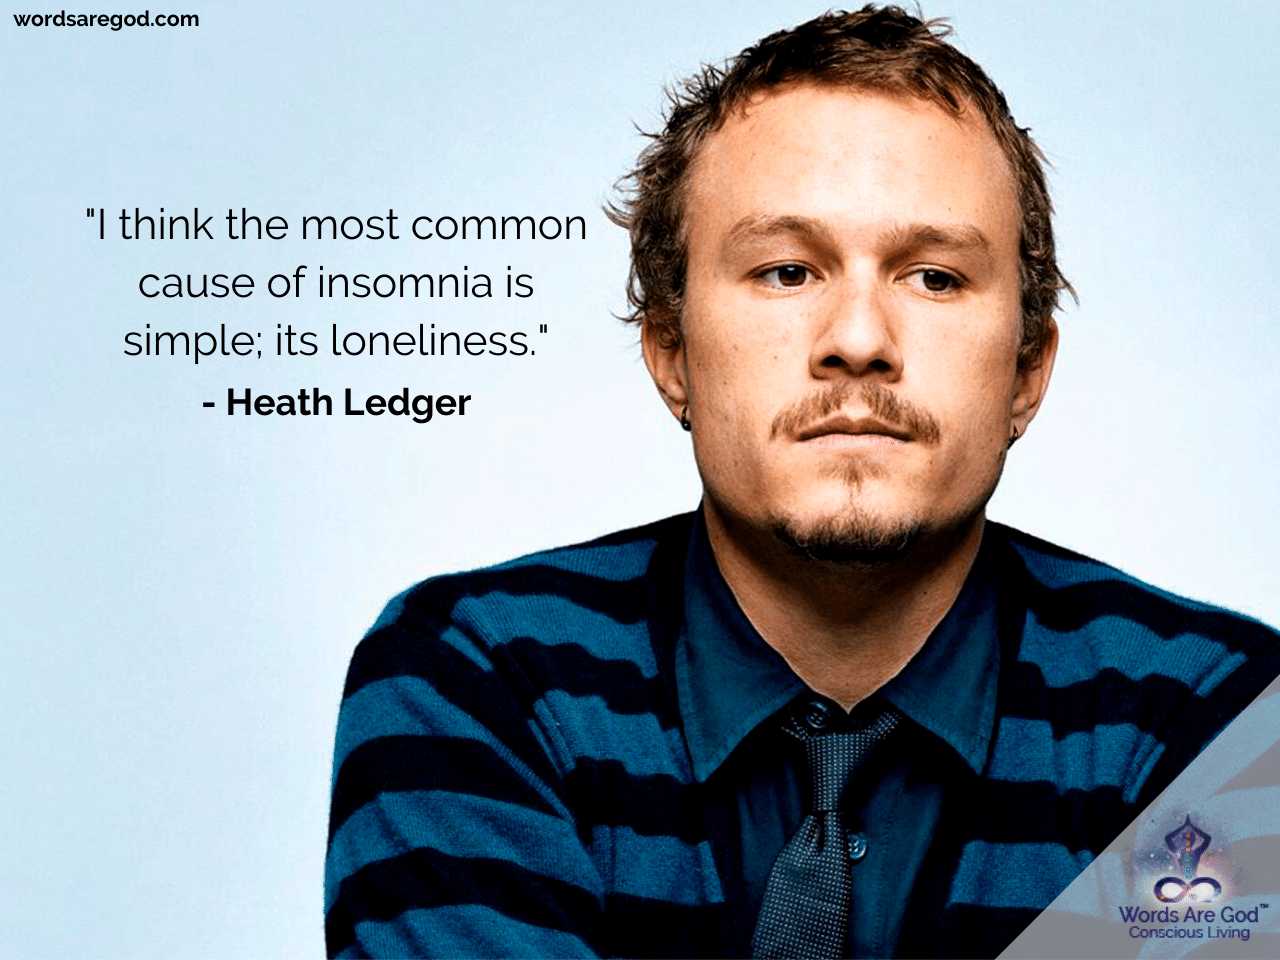 Heath Ledger Life Quotes